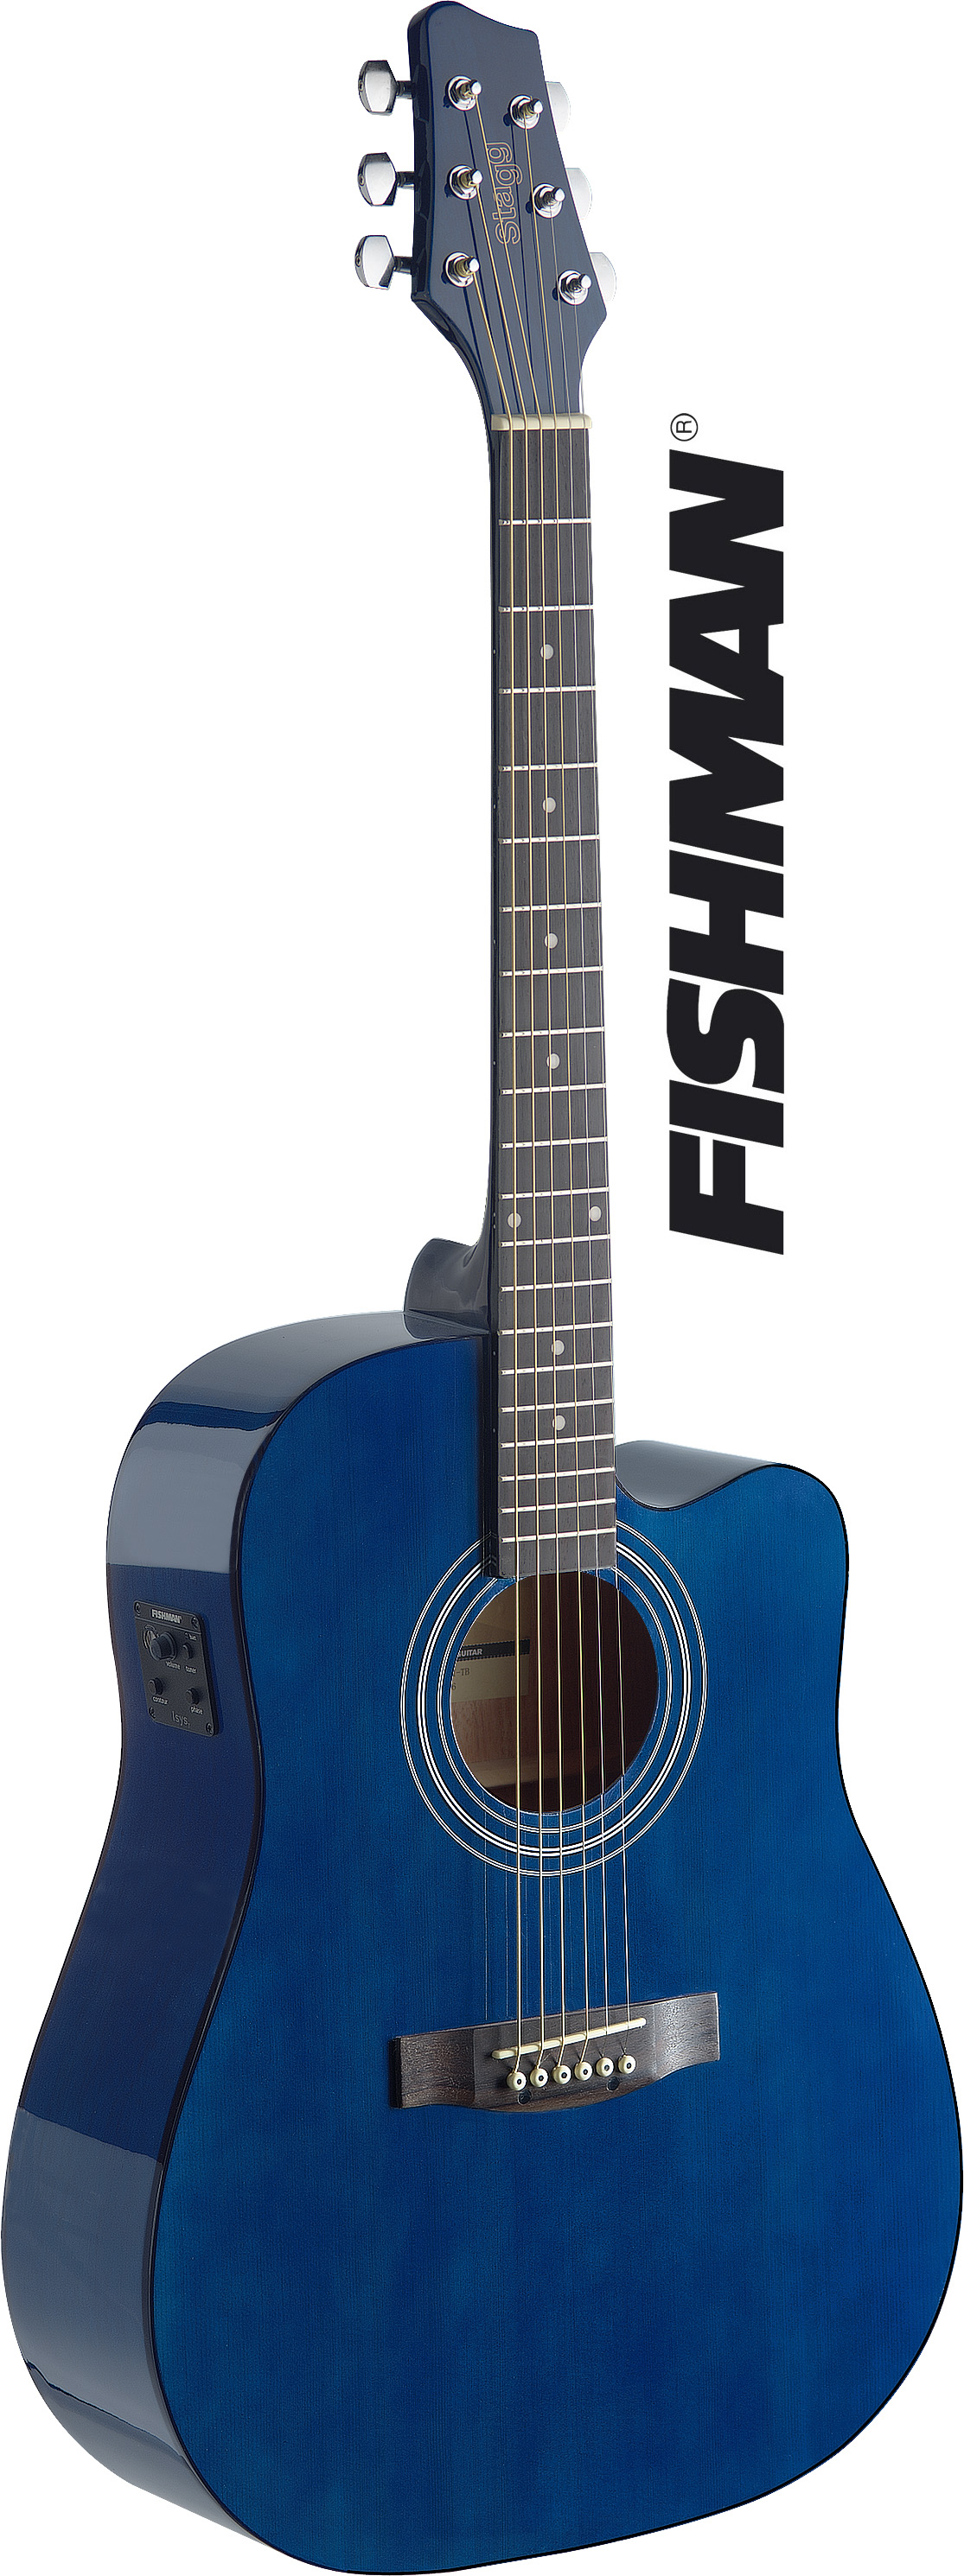 Elektro akustická kytara Dreadnought s výkrojem a elektronikou FISHMAN, TB 